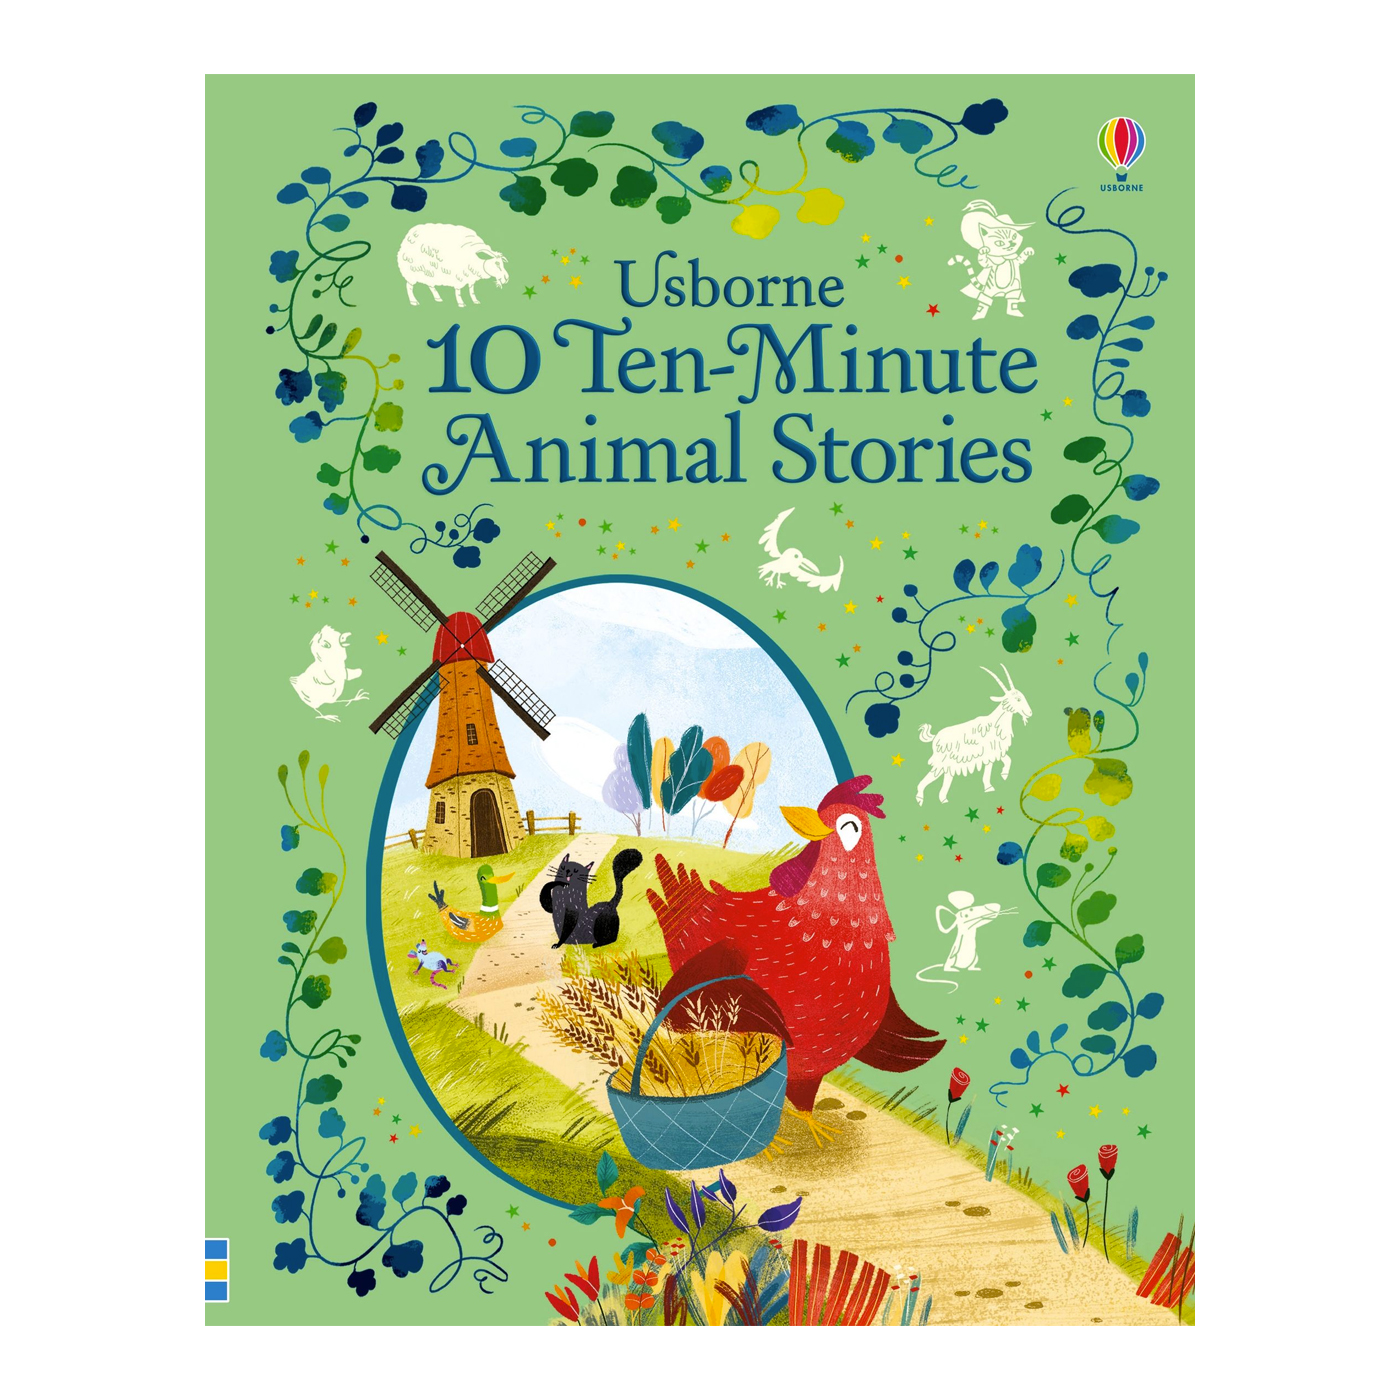 USBORNE 10 Ten-Minute Animal Stories